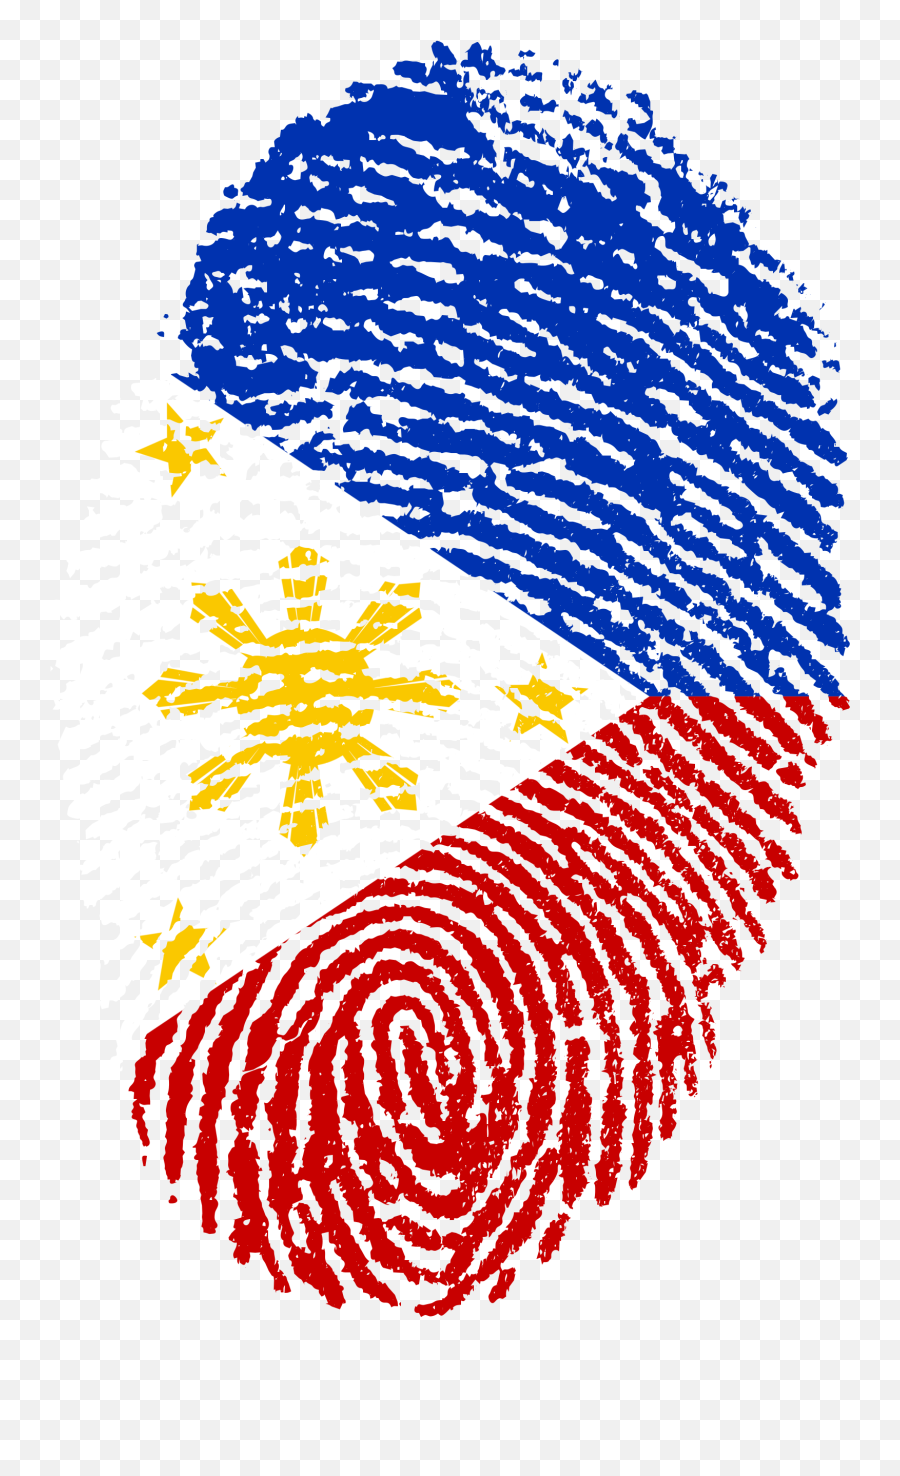 Snappygoatcom - Free Public Domain Images Snappygoatcom Philippine Flag Fingerprint Png,Fingerprint Png